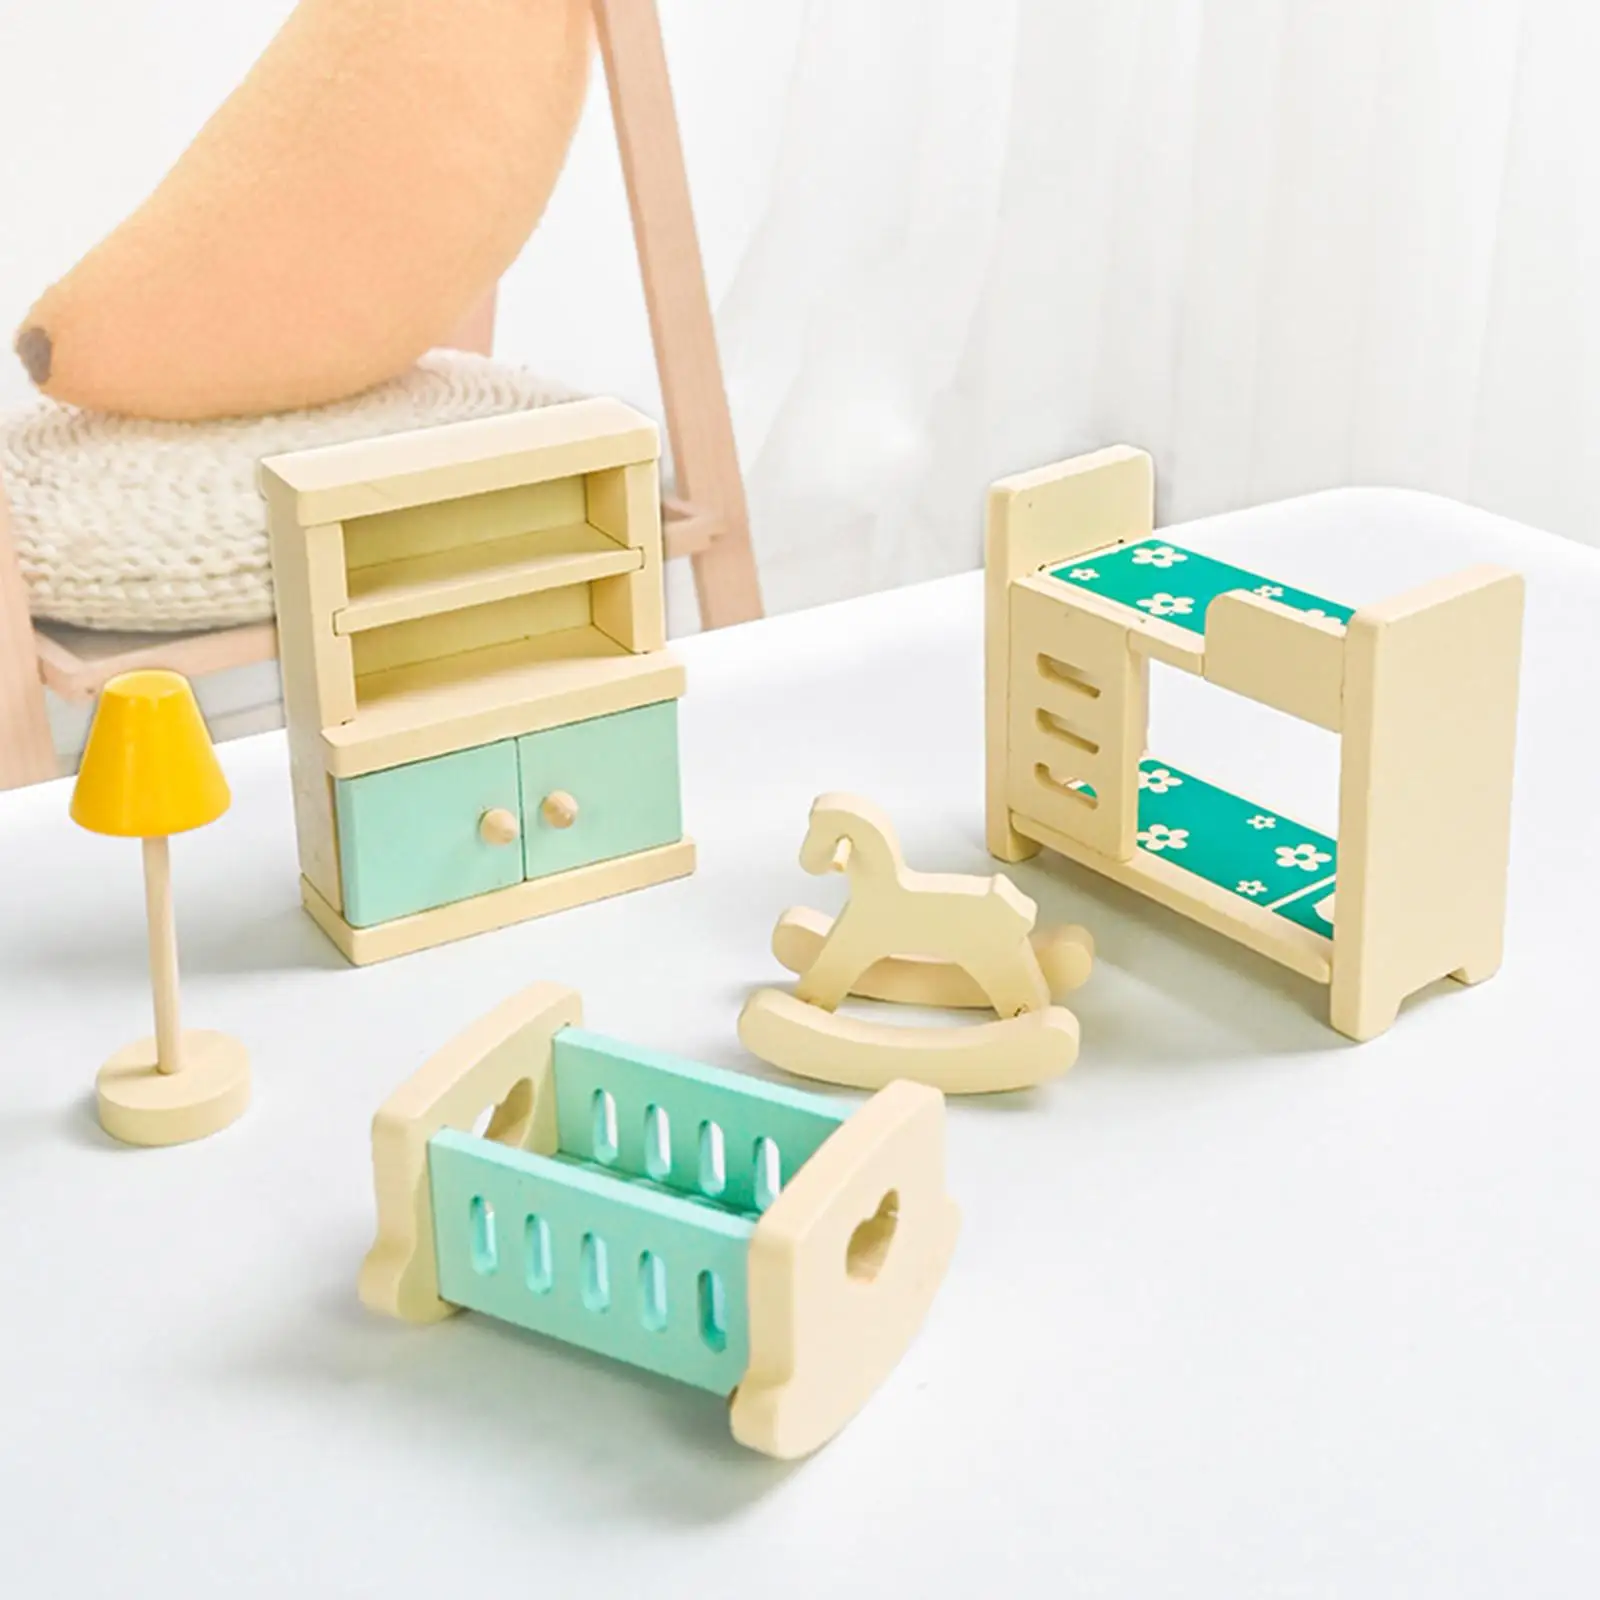 30Pcs Dollhouse Furniture Playset Pretend Play Furniture Toy Dollhouse Furniture Set for Decor Ornament